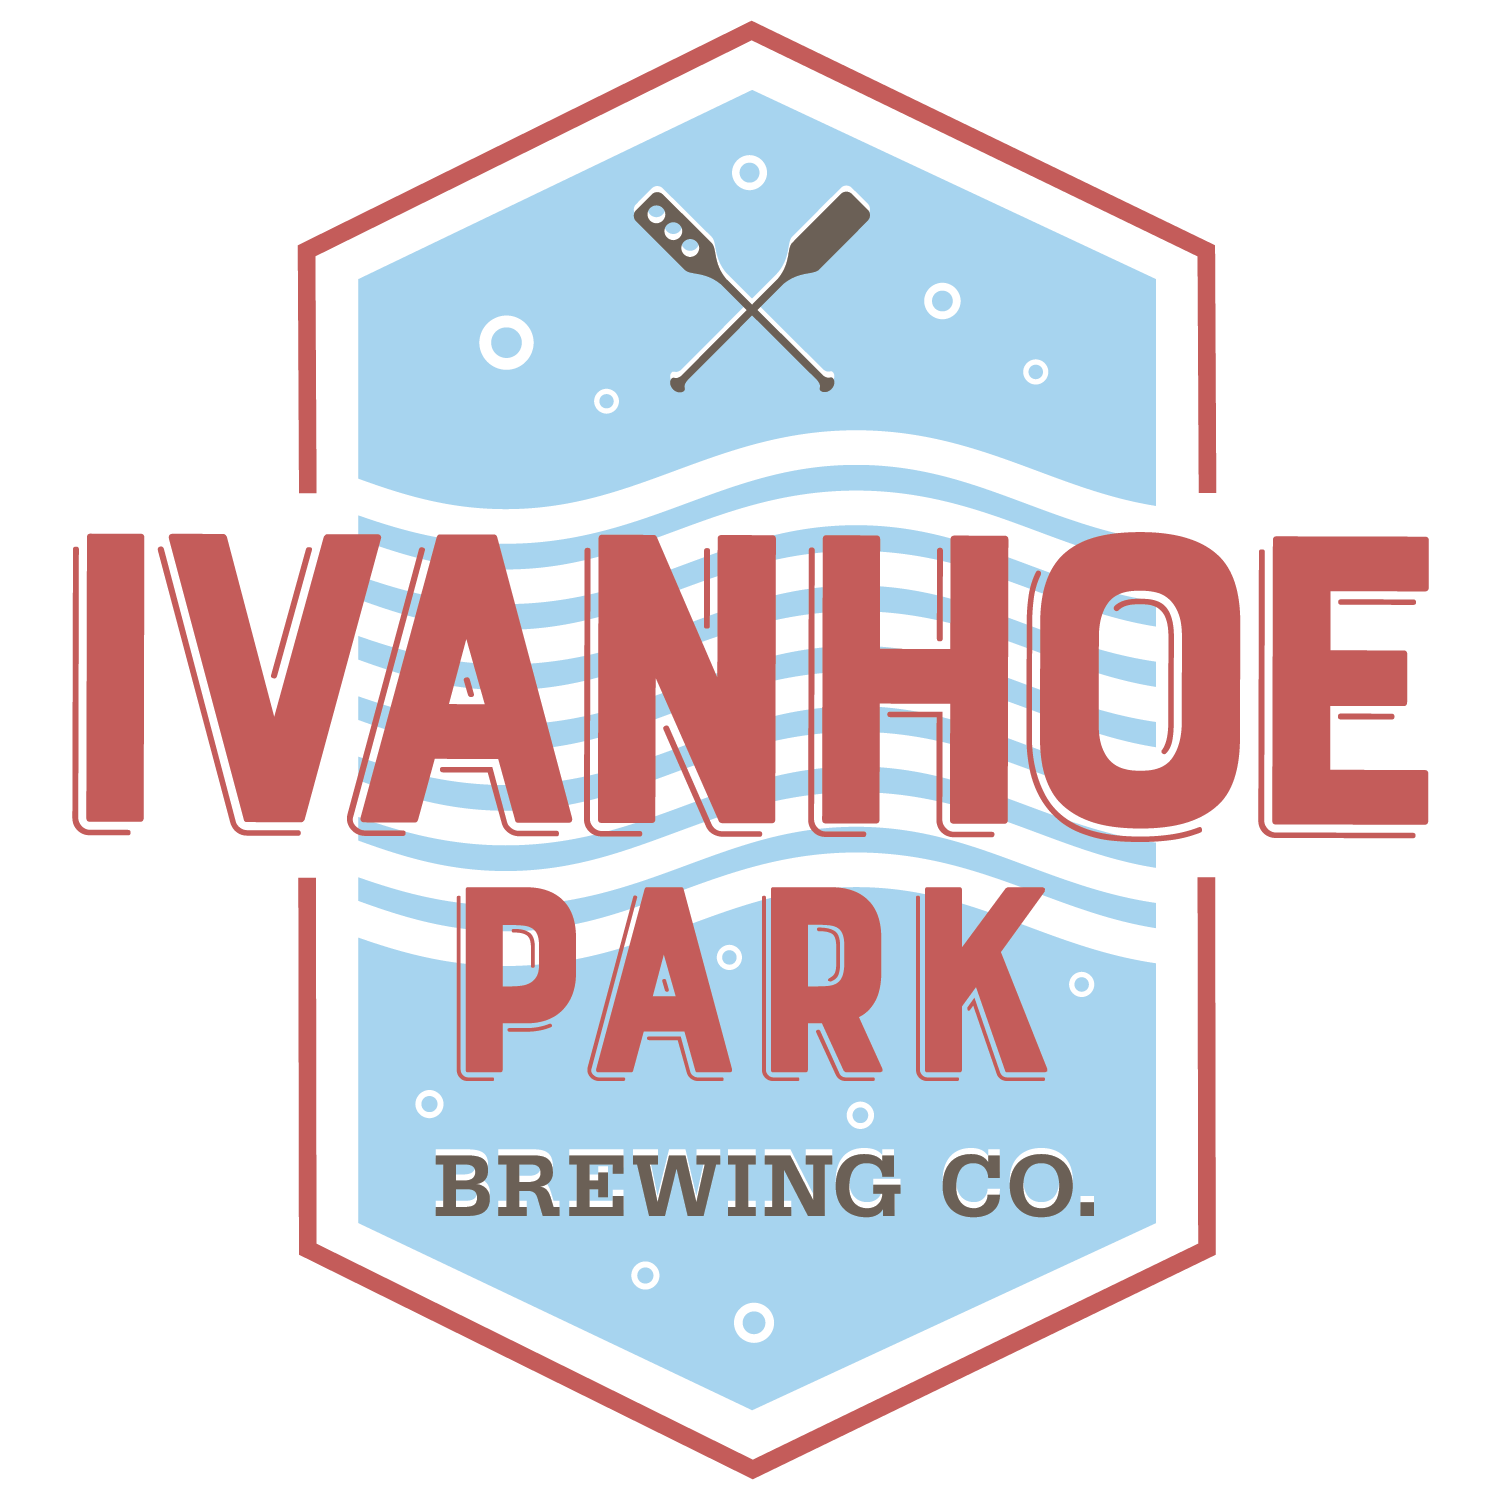 Ivanhoe Park Brewing Co